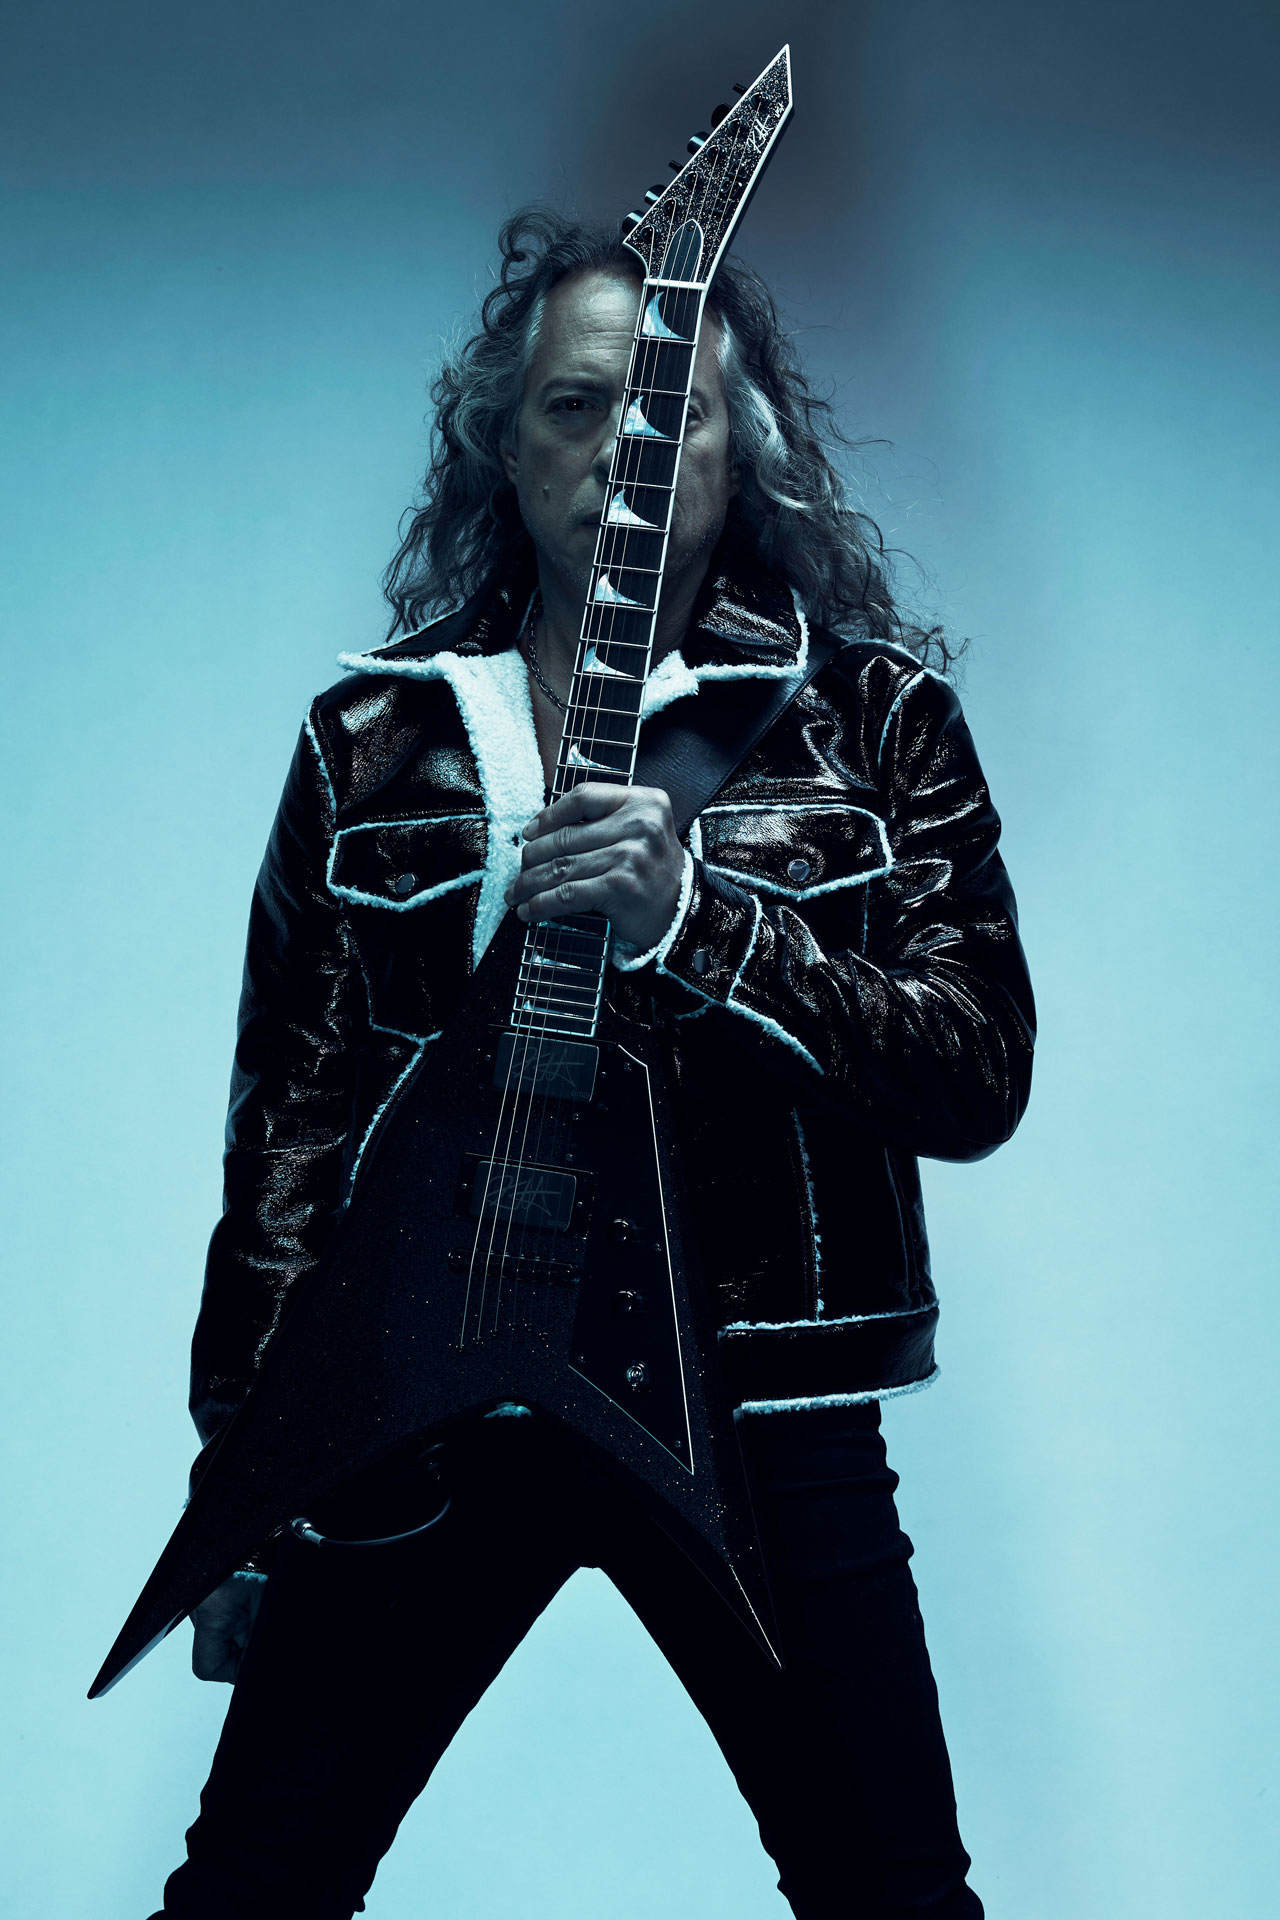 Photo of Metallica's Kirk Hammett by Tim Saccenti